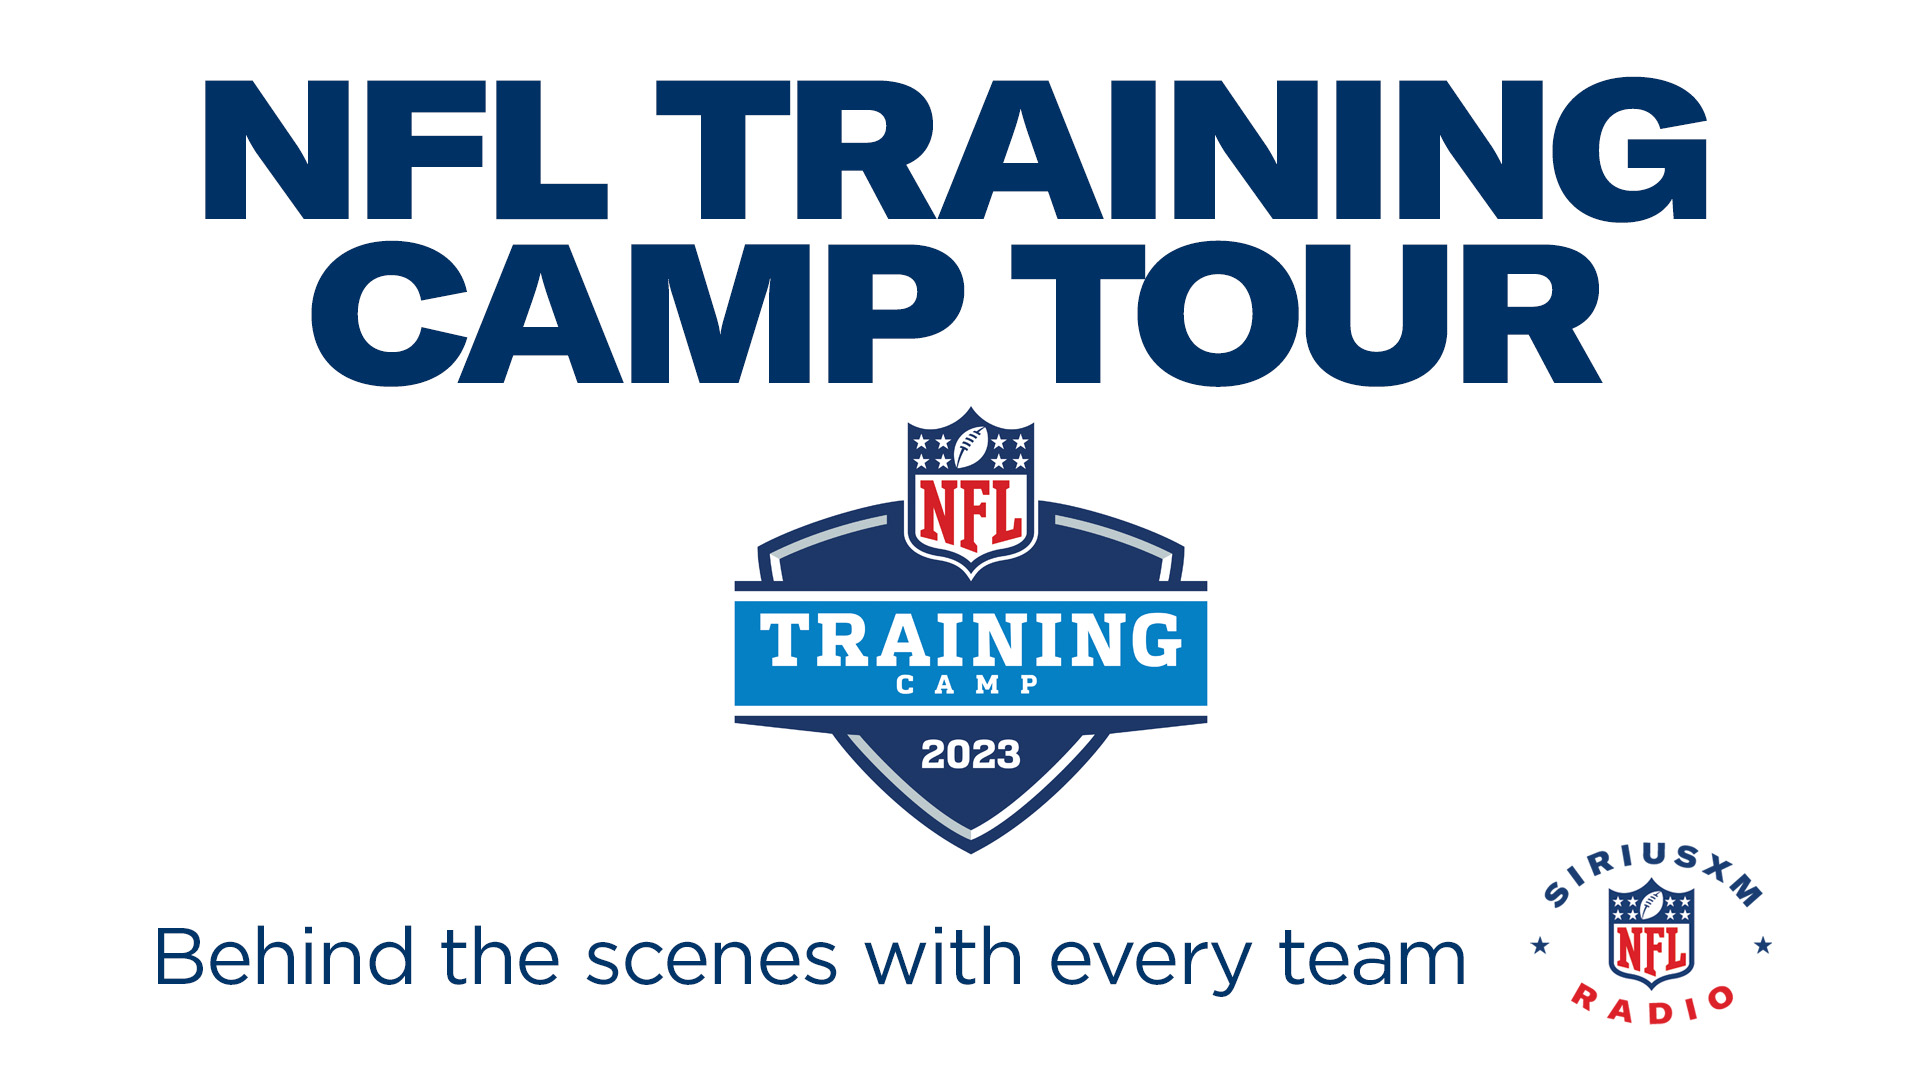 SiriusXM NFL Radio's NFL Training Camp Tour 2023